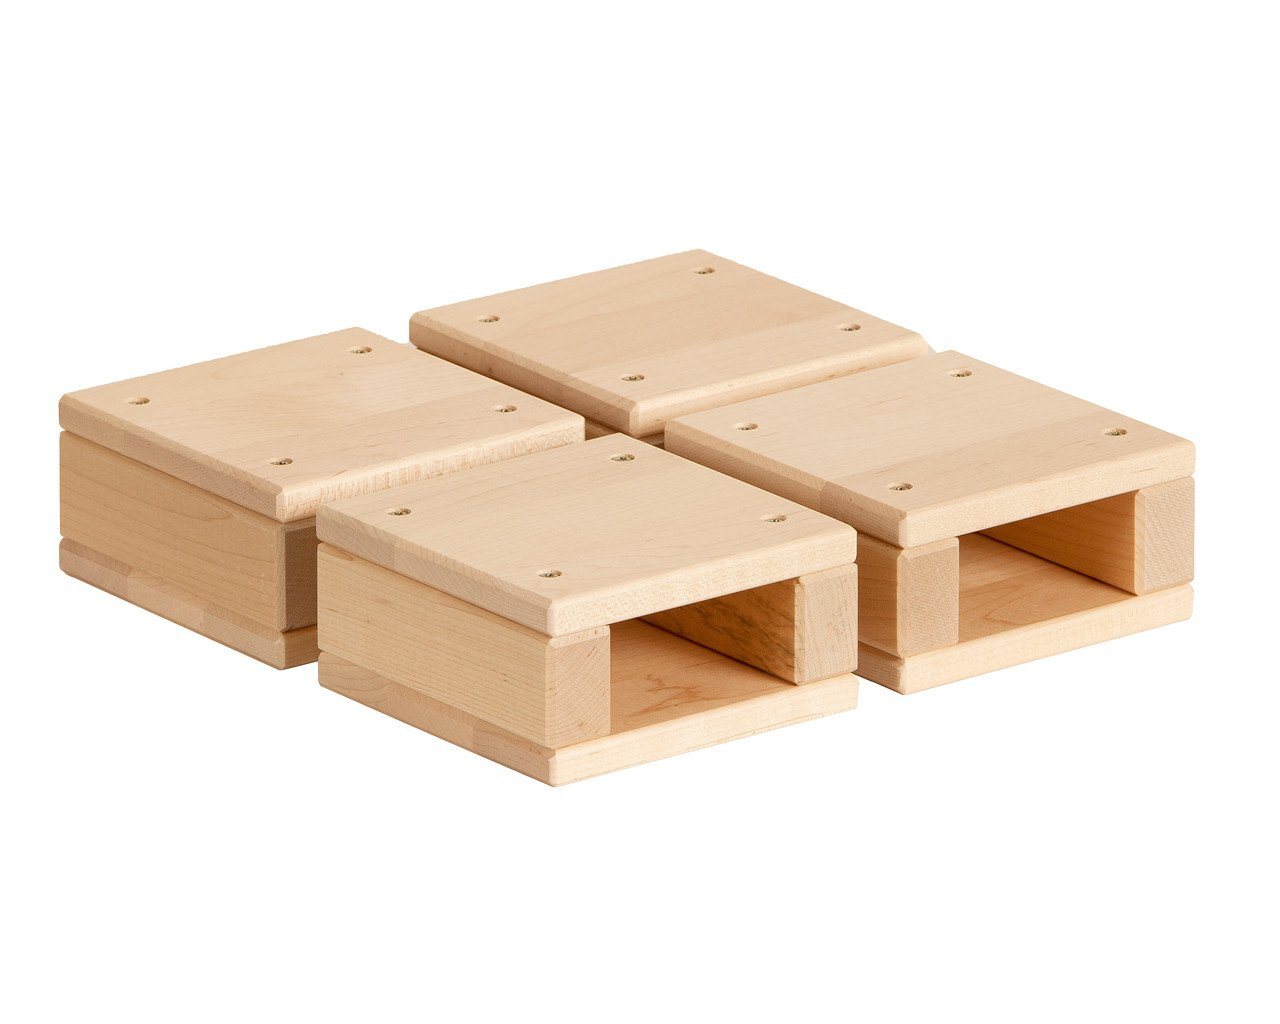 Hollow Blocks, Children's Wooden Hollow Blocks